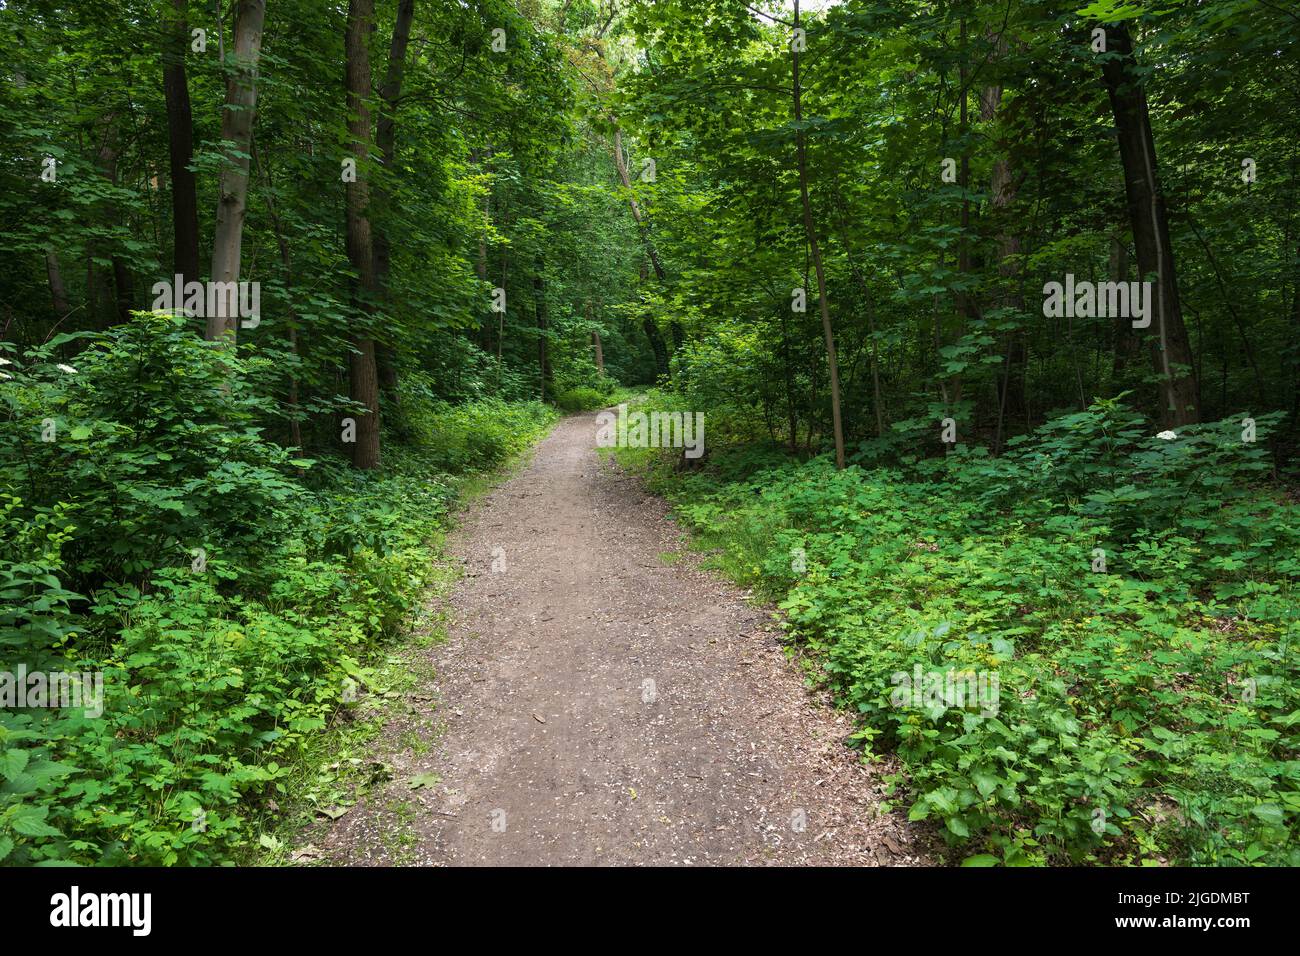 Idyllic scenery of the forest with footpath through green foliage, Lasek na Kole, Warsaw, Poland. Stock Photo